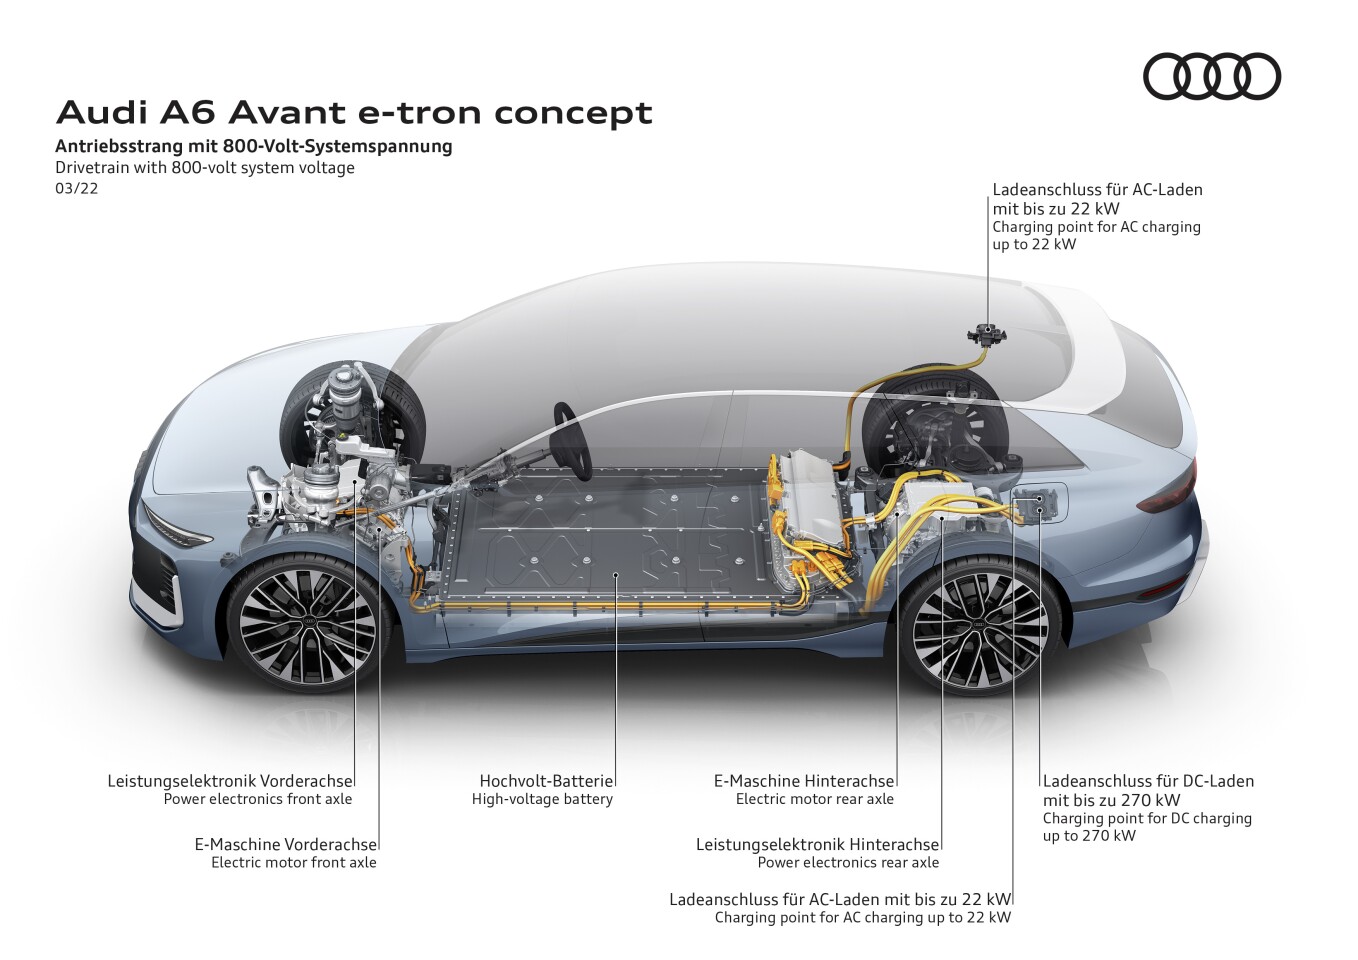 Audi A6 Avant e-tron konsept modeli tanıtıldı